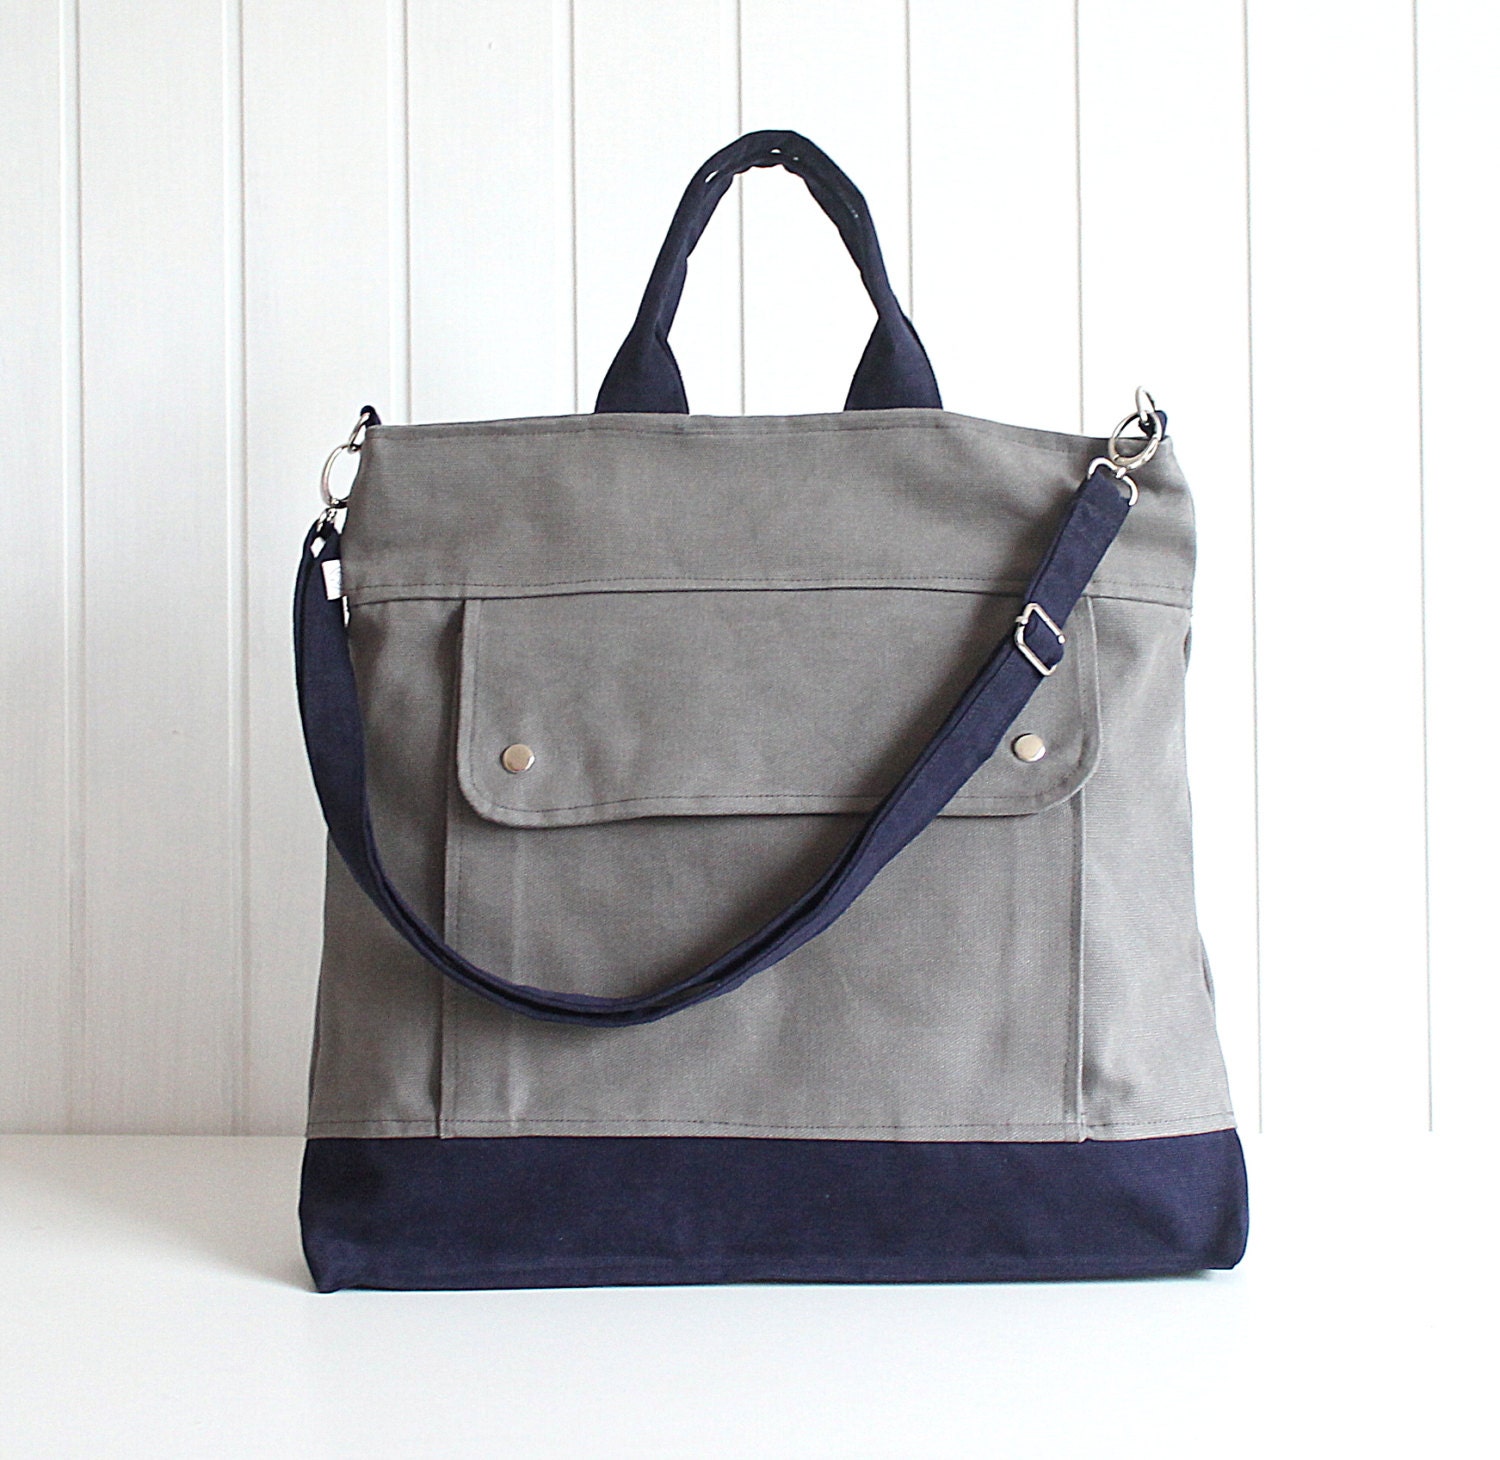 Men - Project Messenger Bag in Olive Grey with dark Navy - UNISEX BAG / Tote Bag / For her / For men / For women / For him / under 50 - bayanhippo